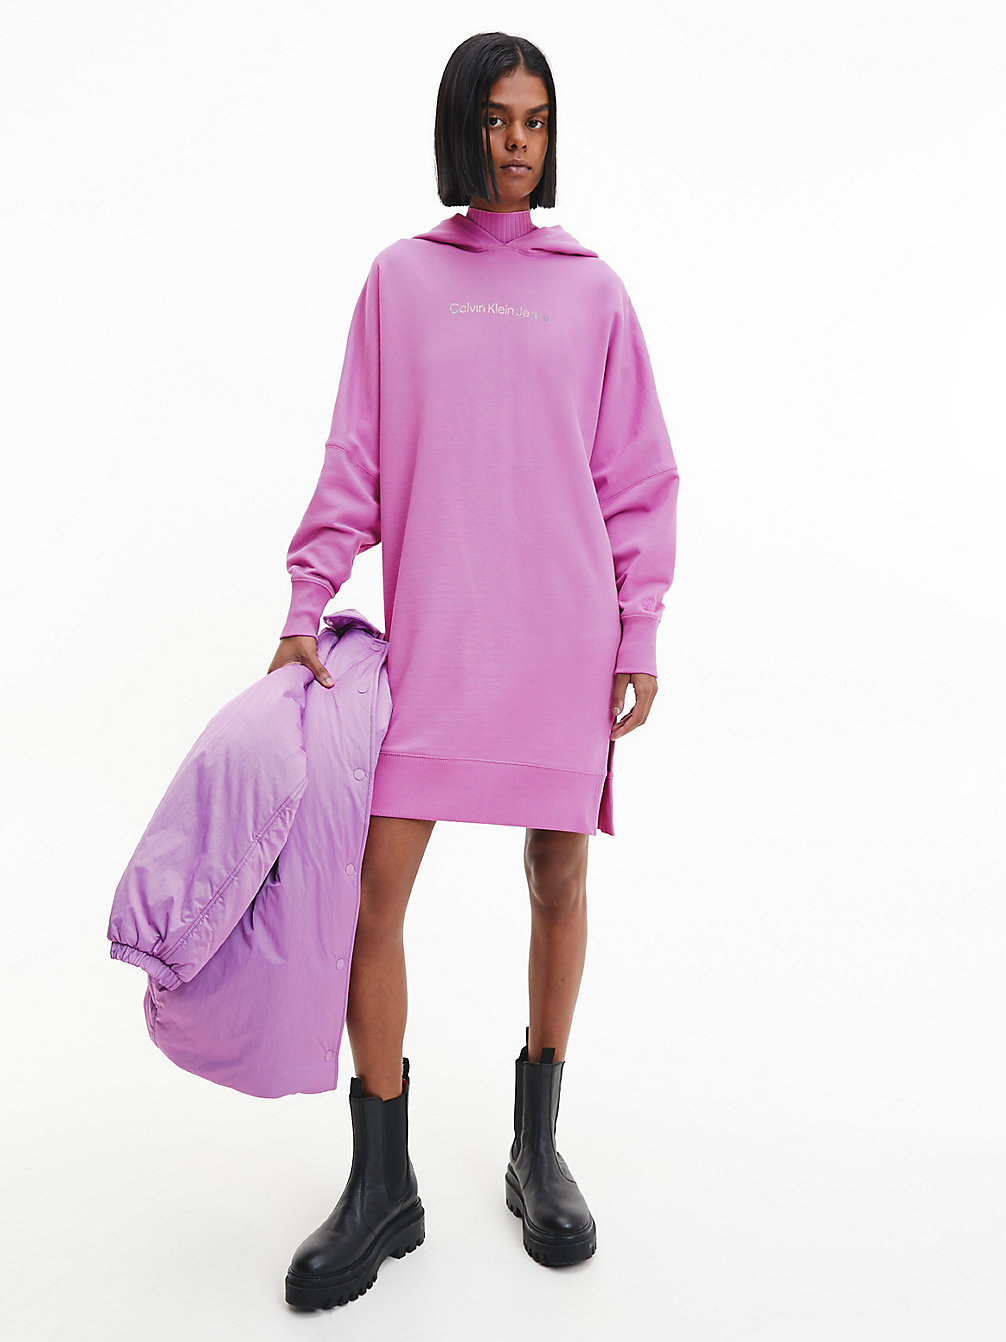 IRIS ORCHID Relaxed Hooded Sweatshirt Dress undefined women Calvin Klein